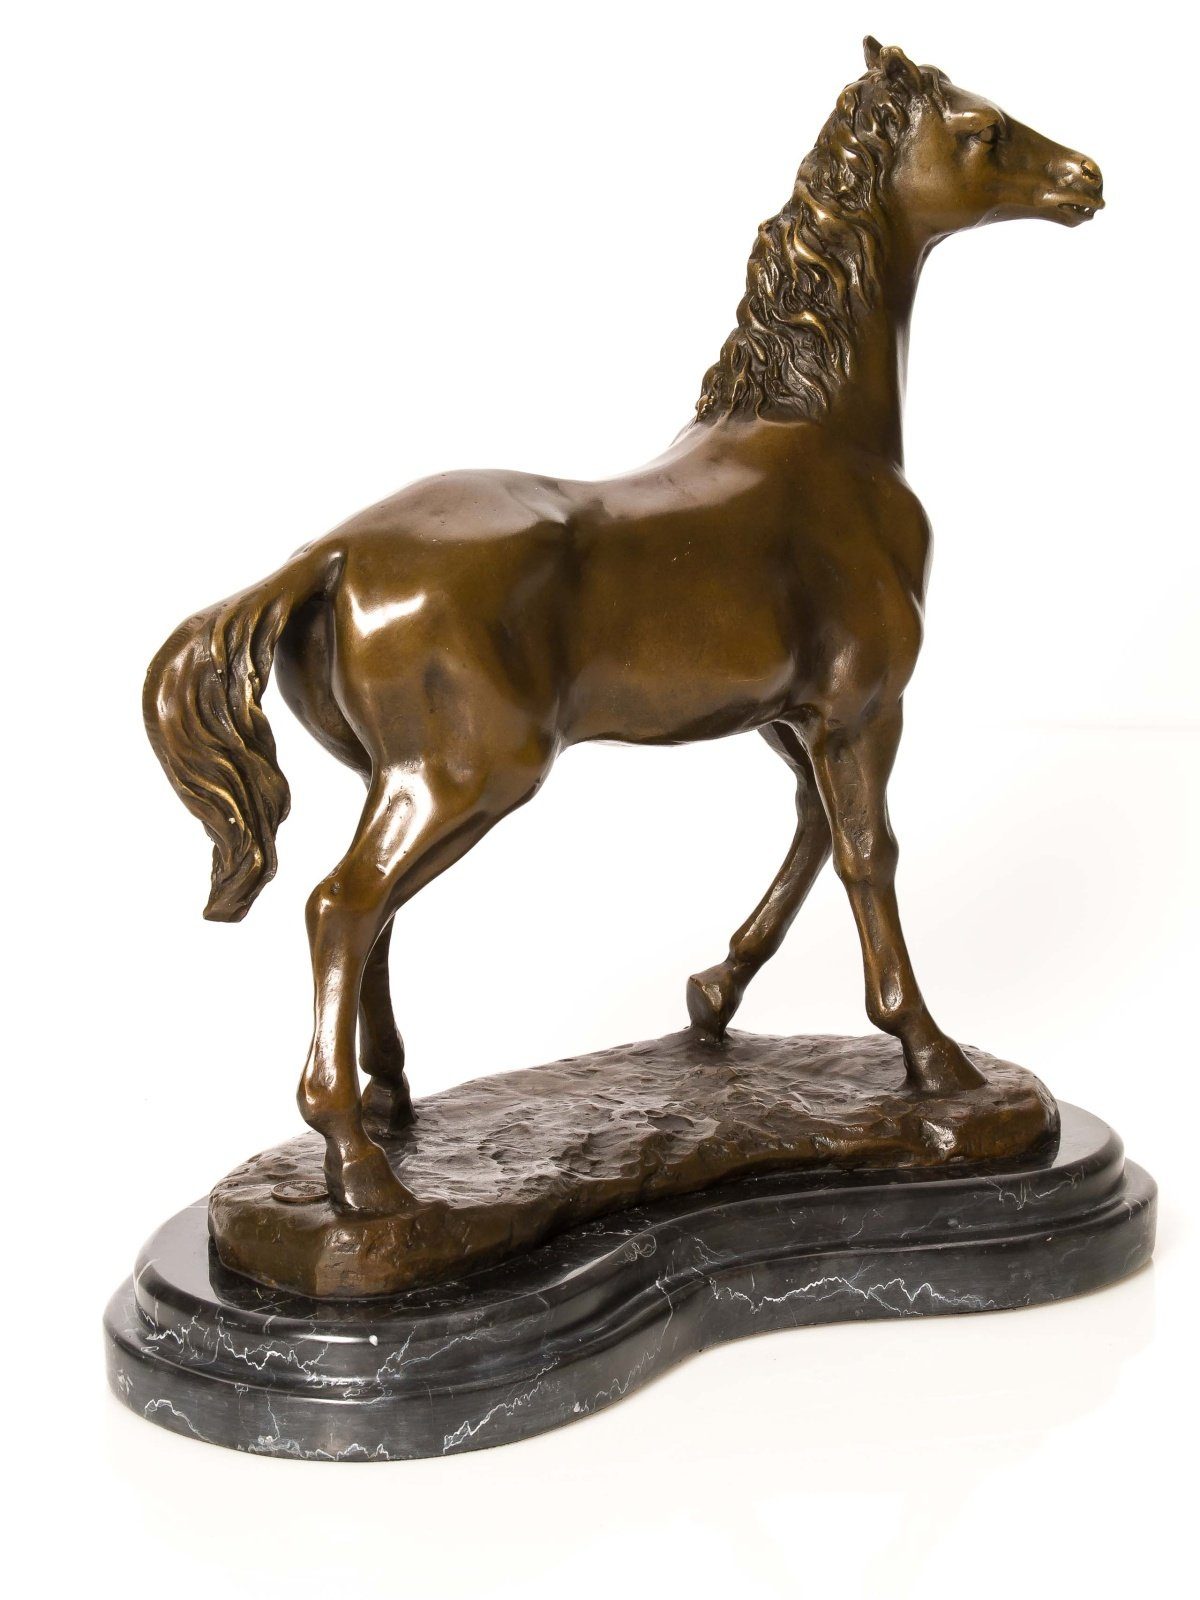 Aubaho Skulptur Bronzeskulptur Bronze Antik-Stil 32cm Skulptur Statue Figur Pferd 6kg